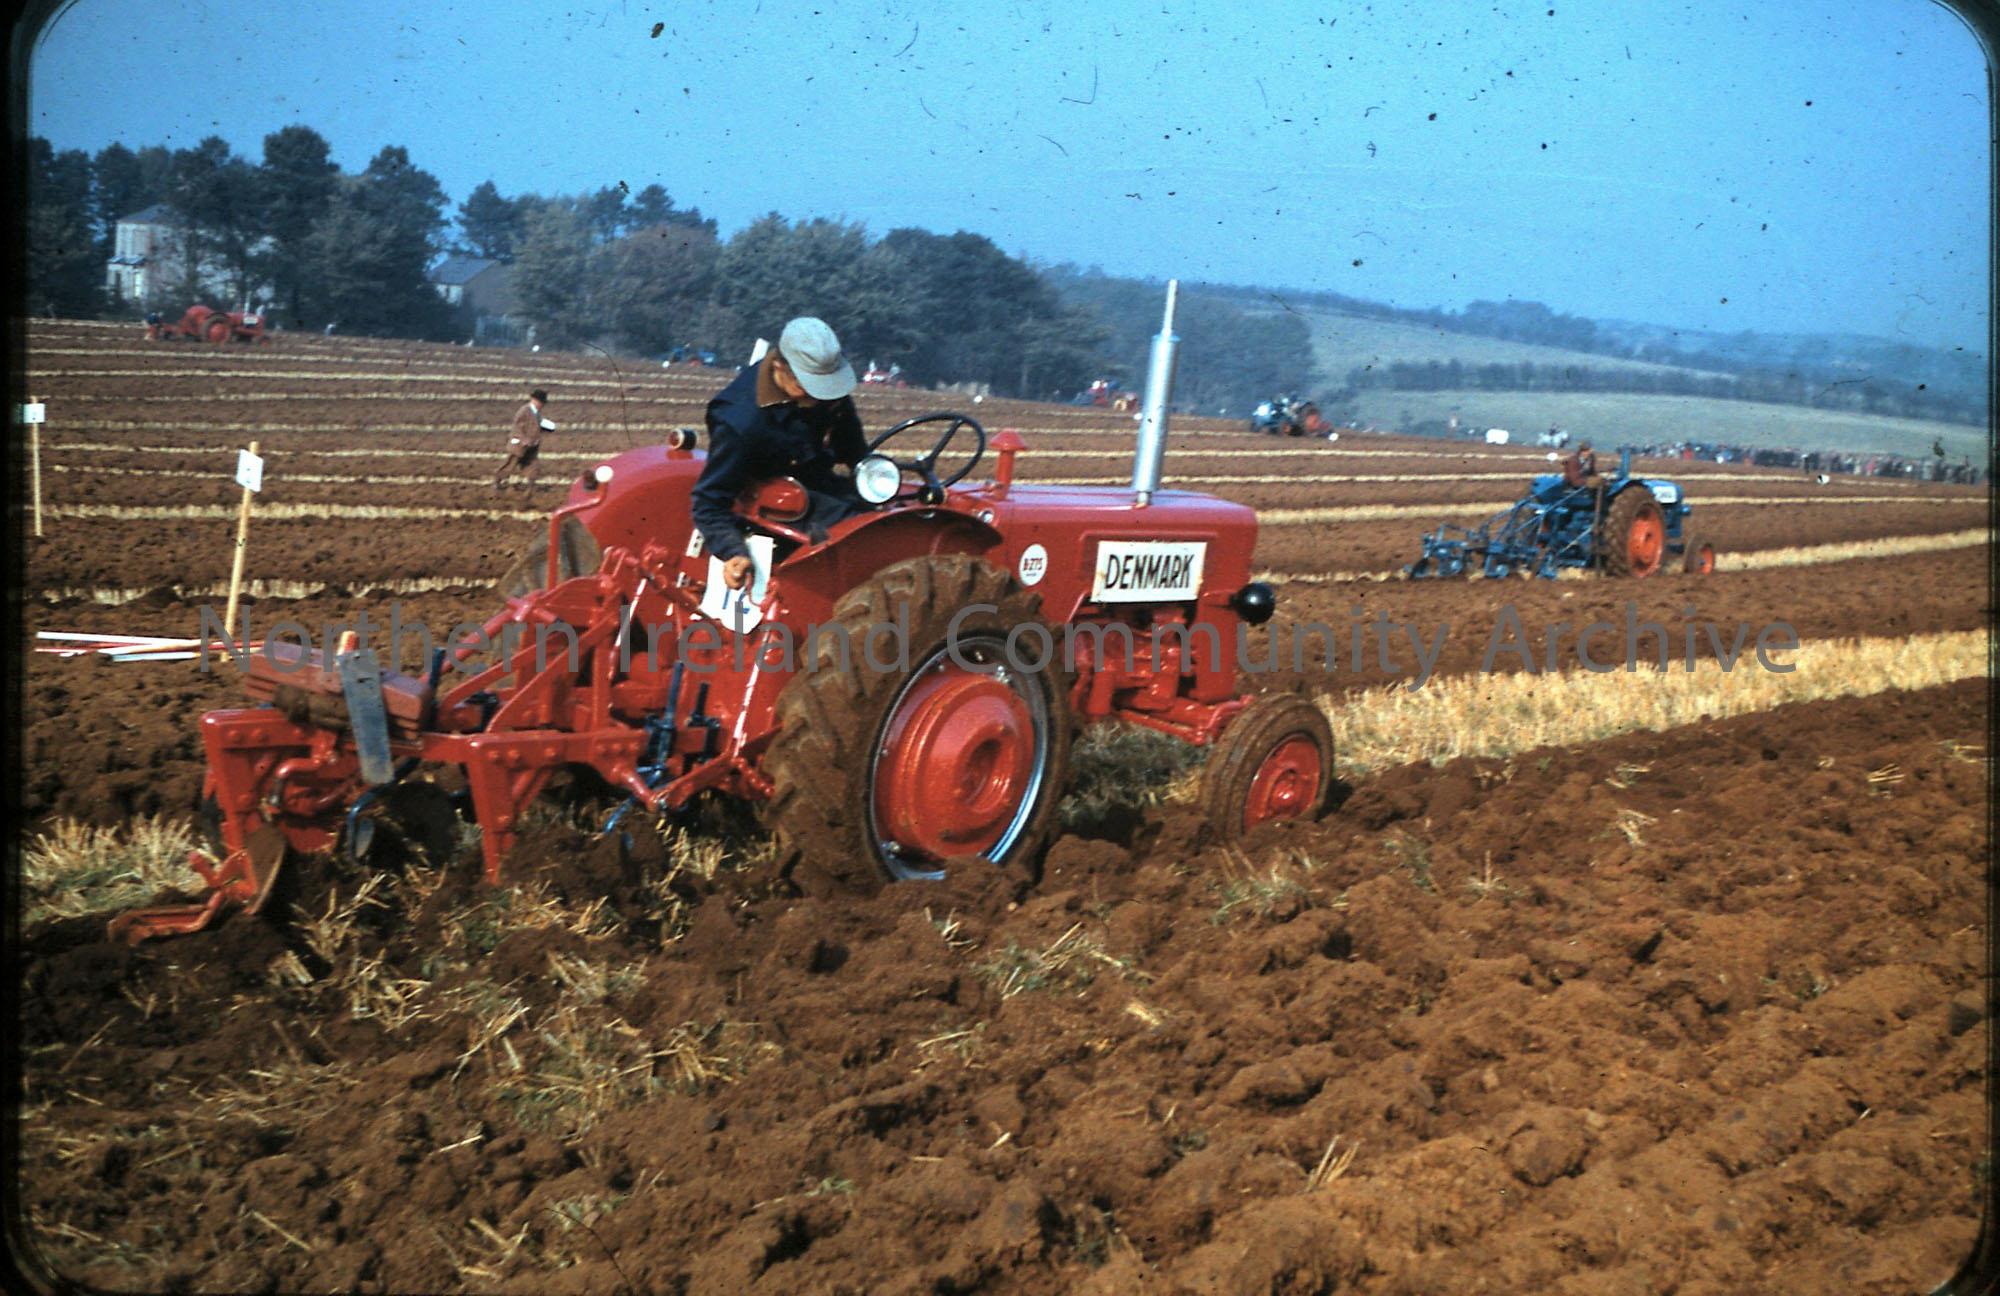 International ploughing match, 1959- Denmark competitor